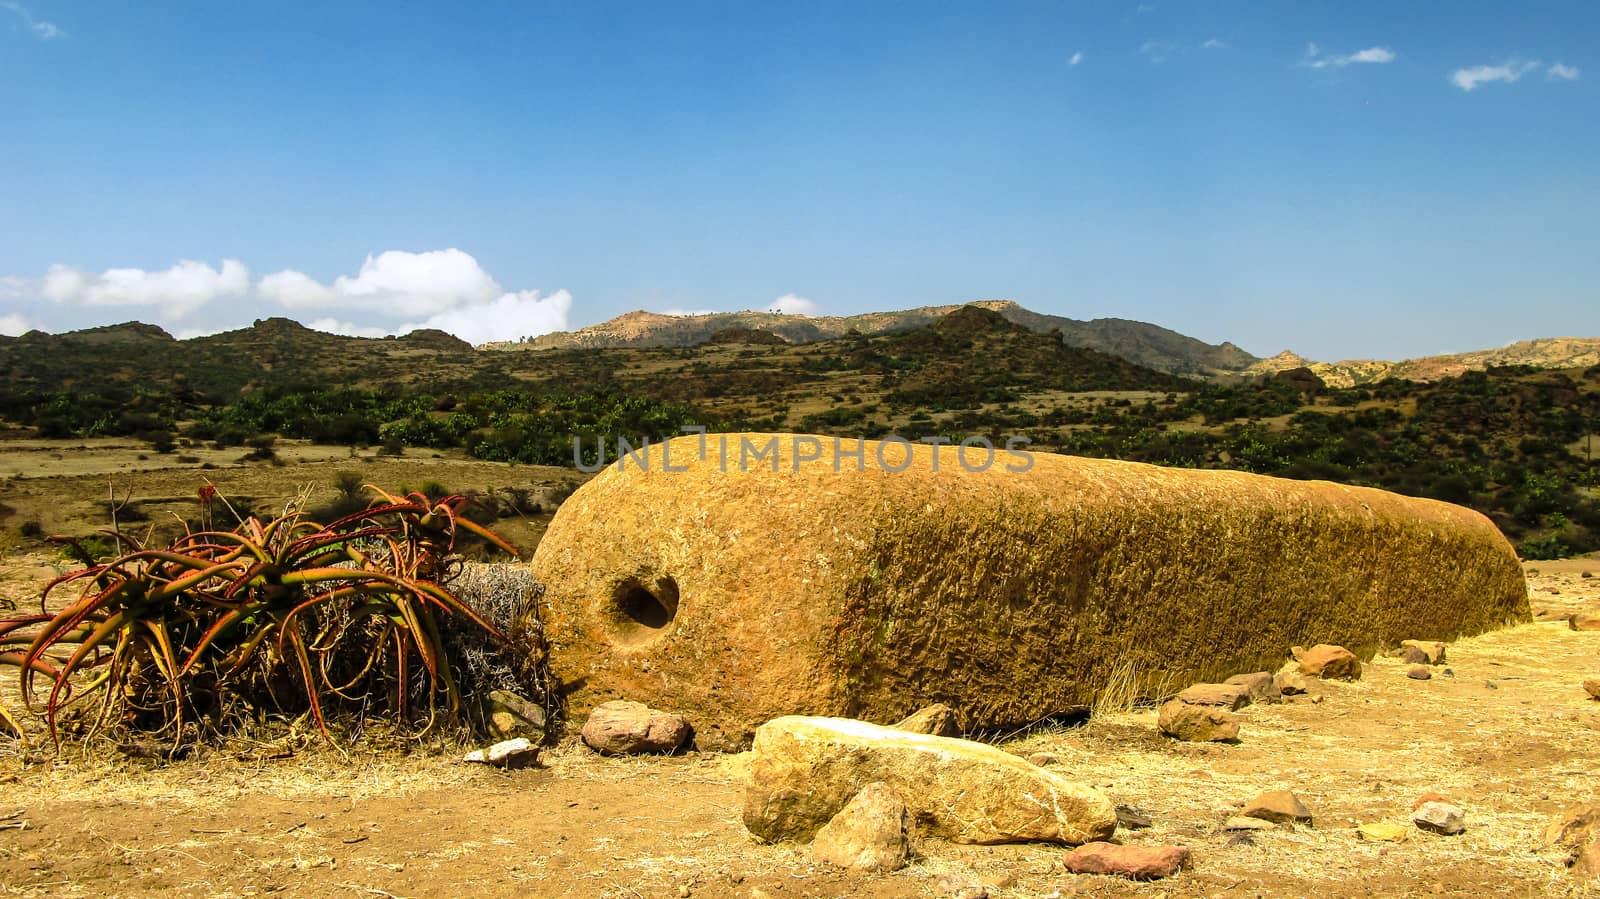 Ruins in Keskese archeological place, Eritrea by homocosmicos